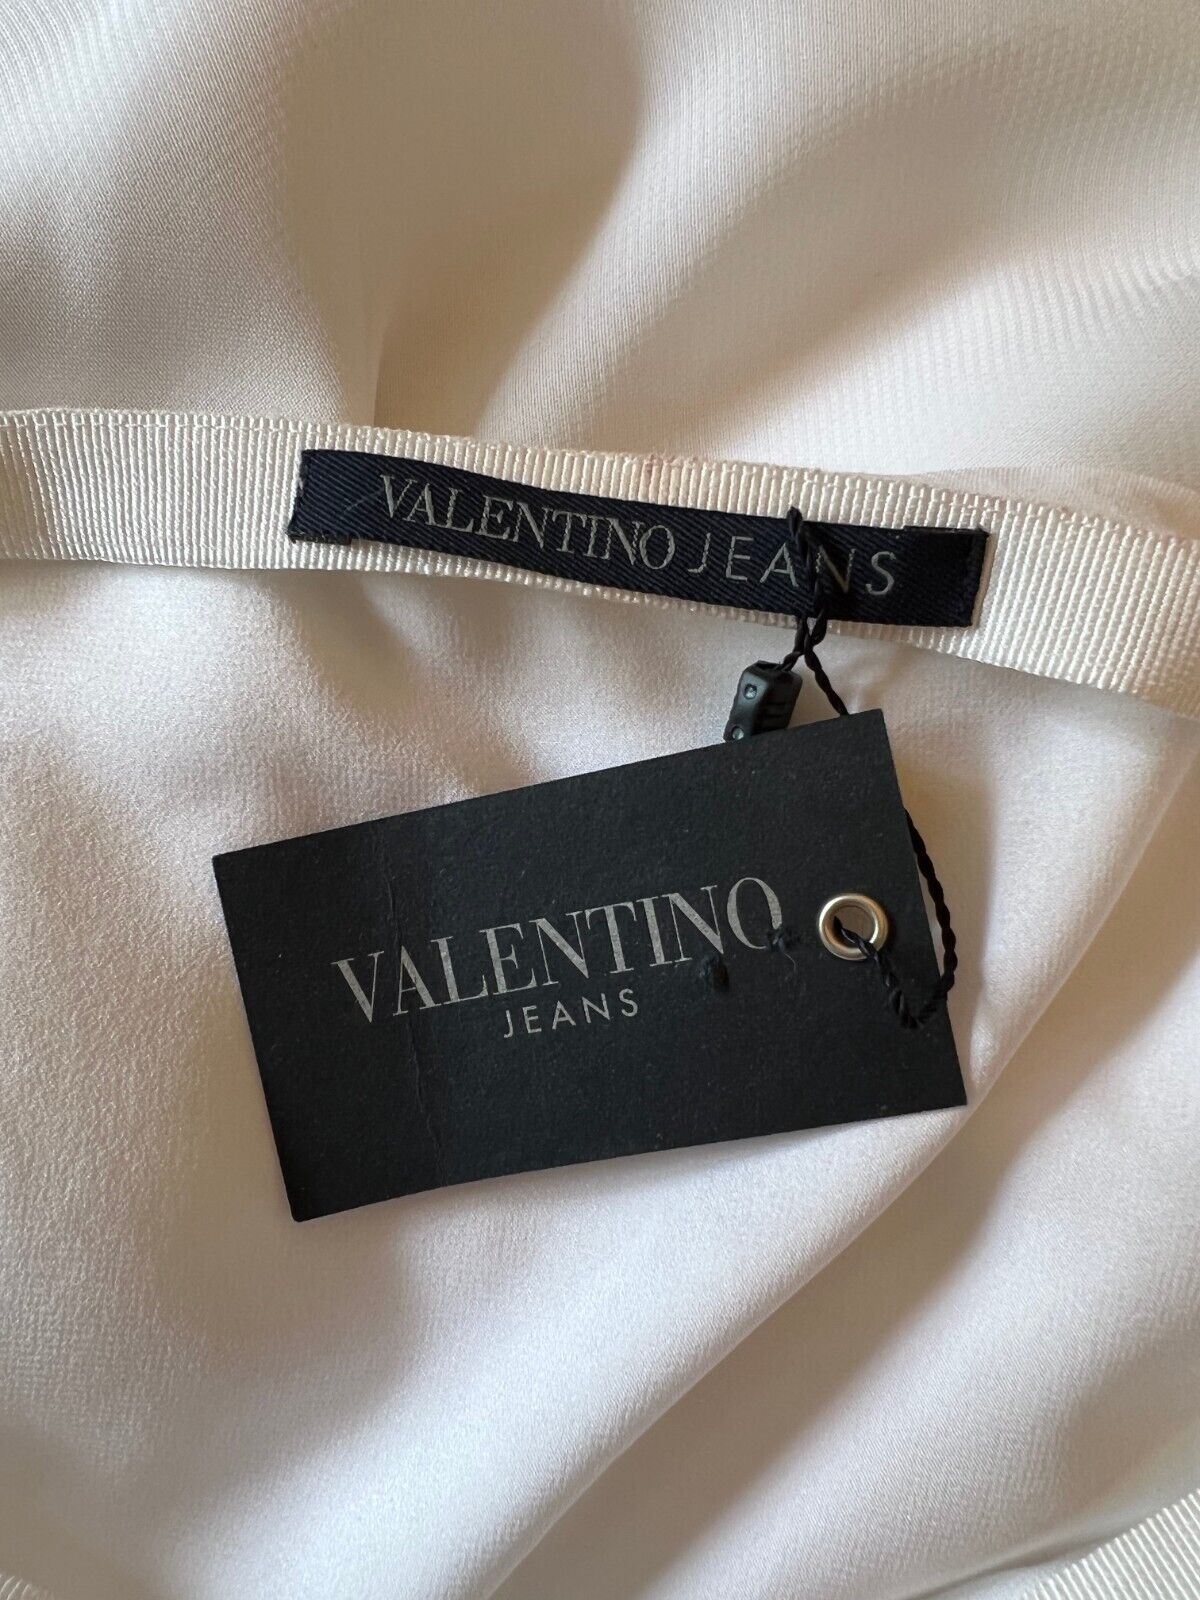 Valentino Jeans Women's White & Black Floral Chiffon Skirt UK 14 EU 42 US 10 it 46 Timeless Fashions